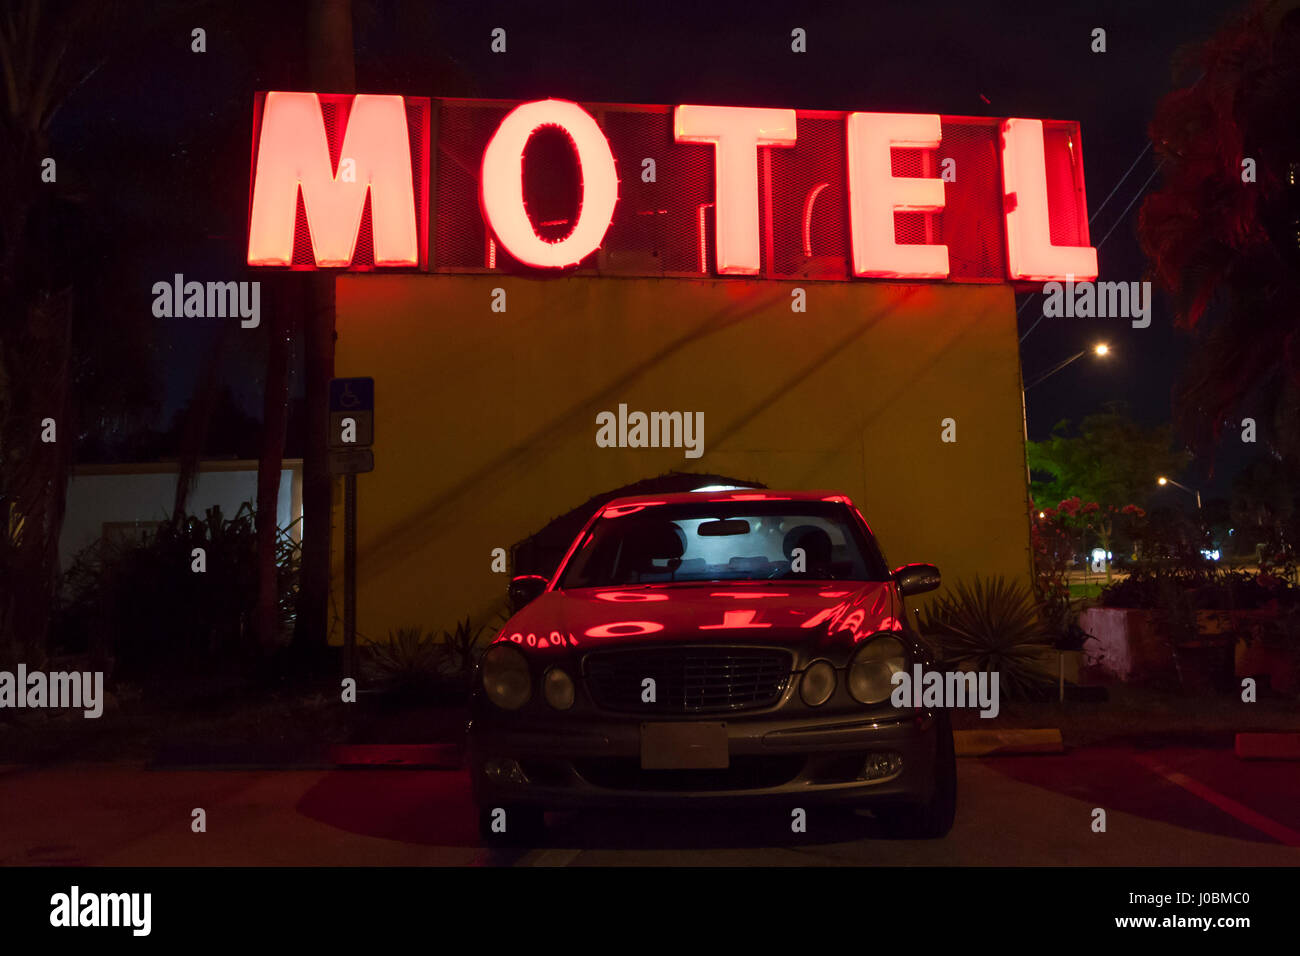 Red motel sign illuminated at night. Florida, United States Stock Photo